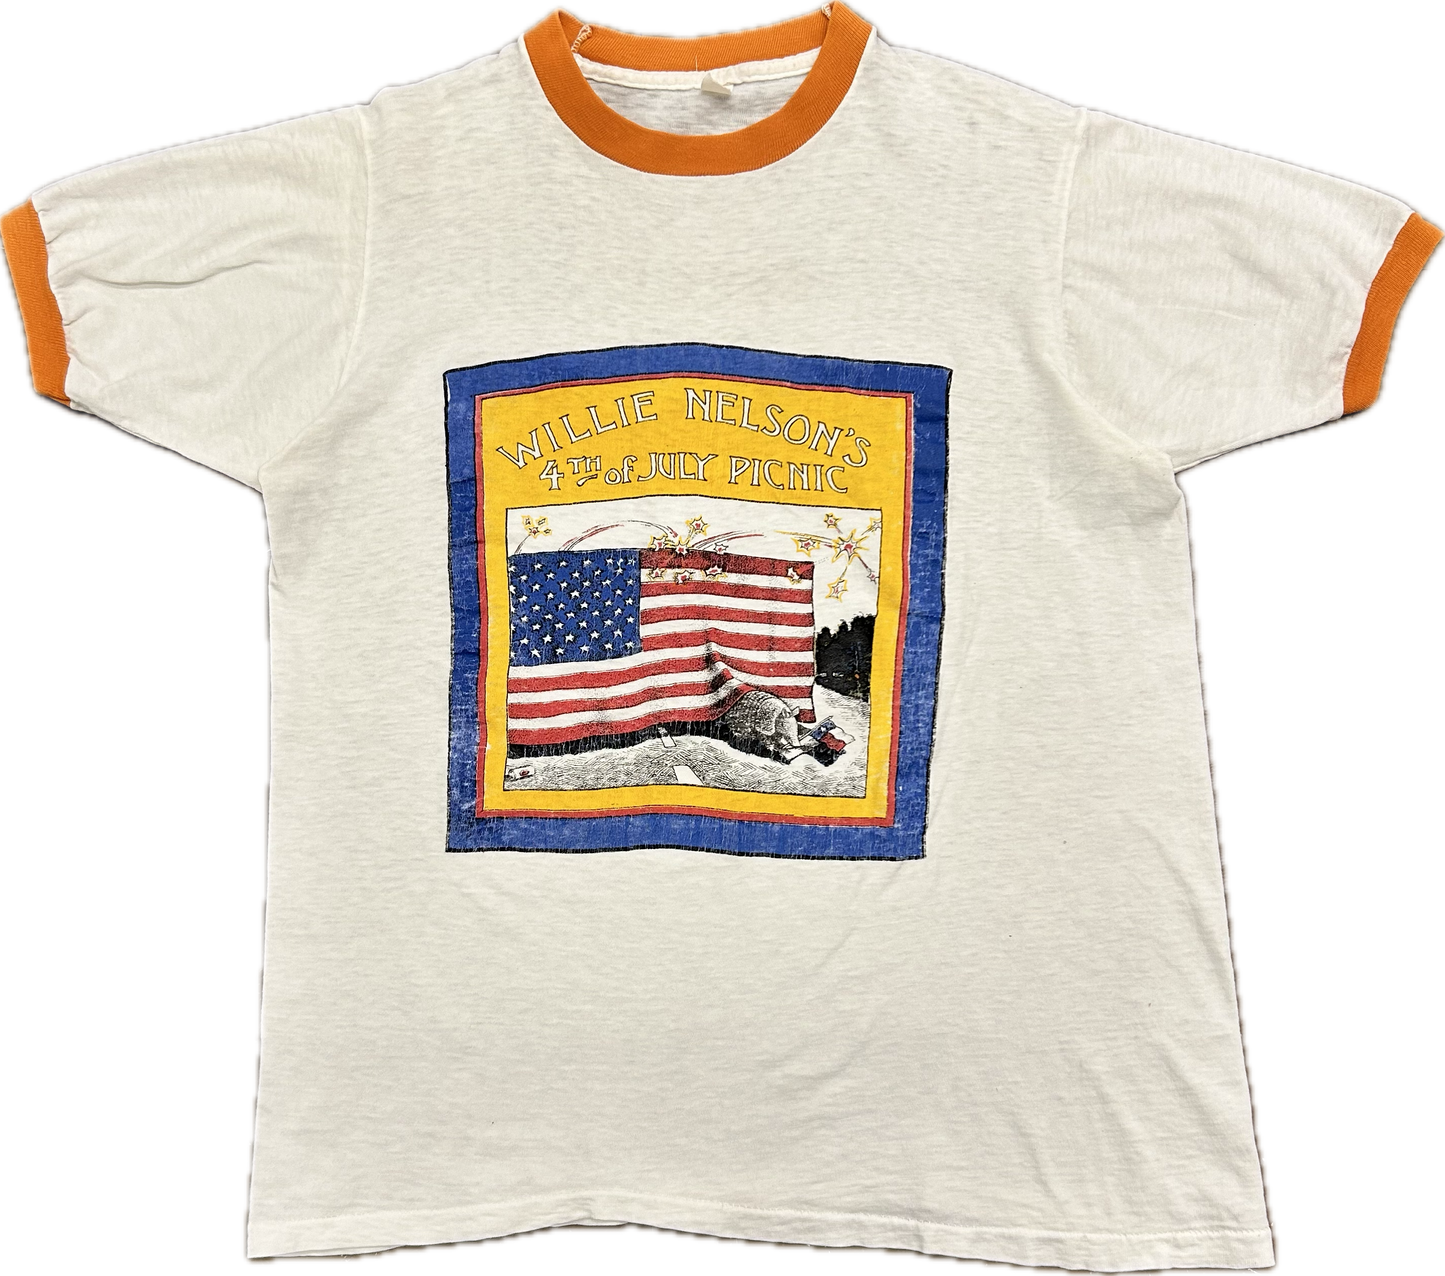 1973 Willie Nelson 4th of July Picnic Tshirt Sz M